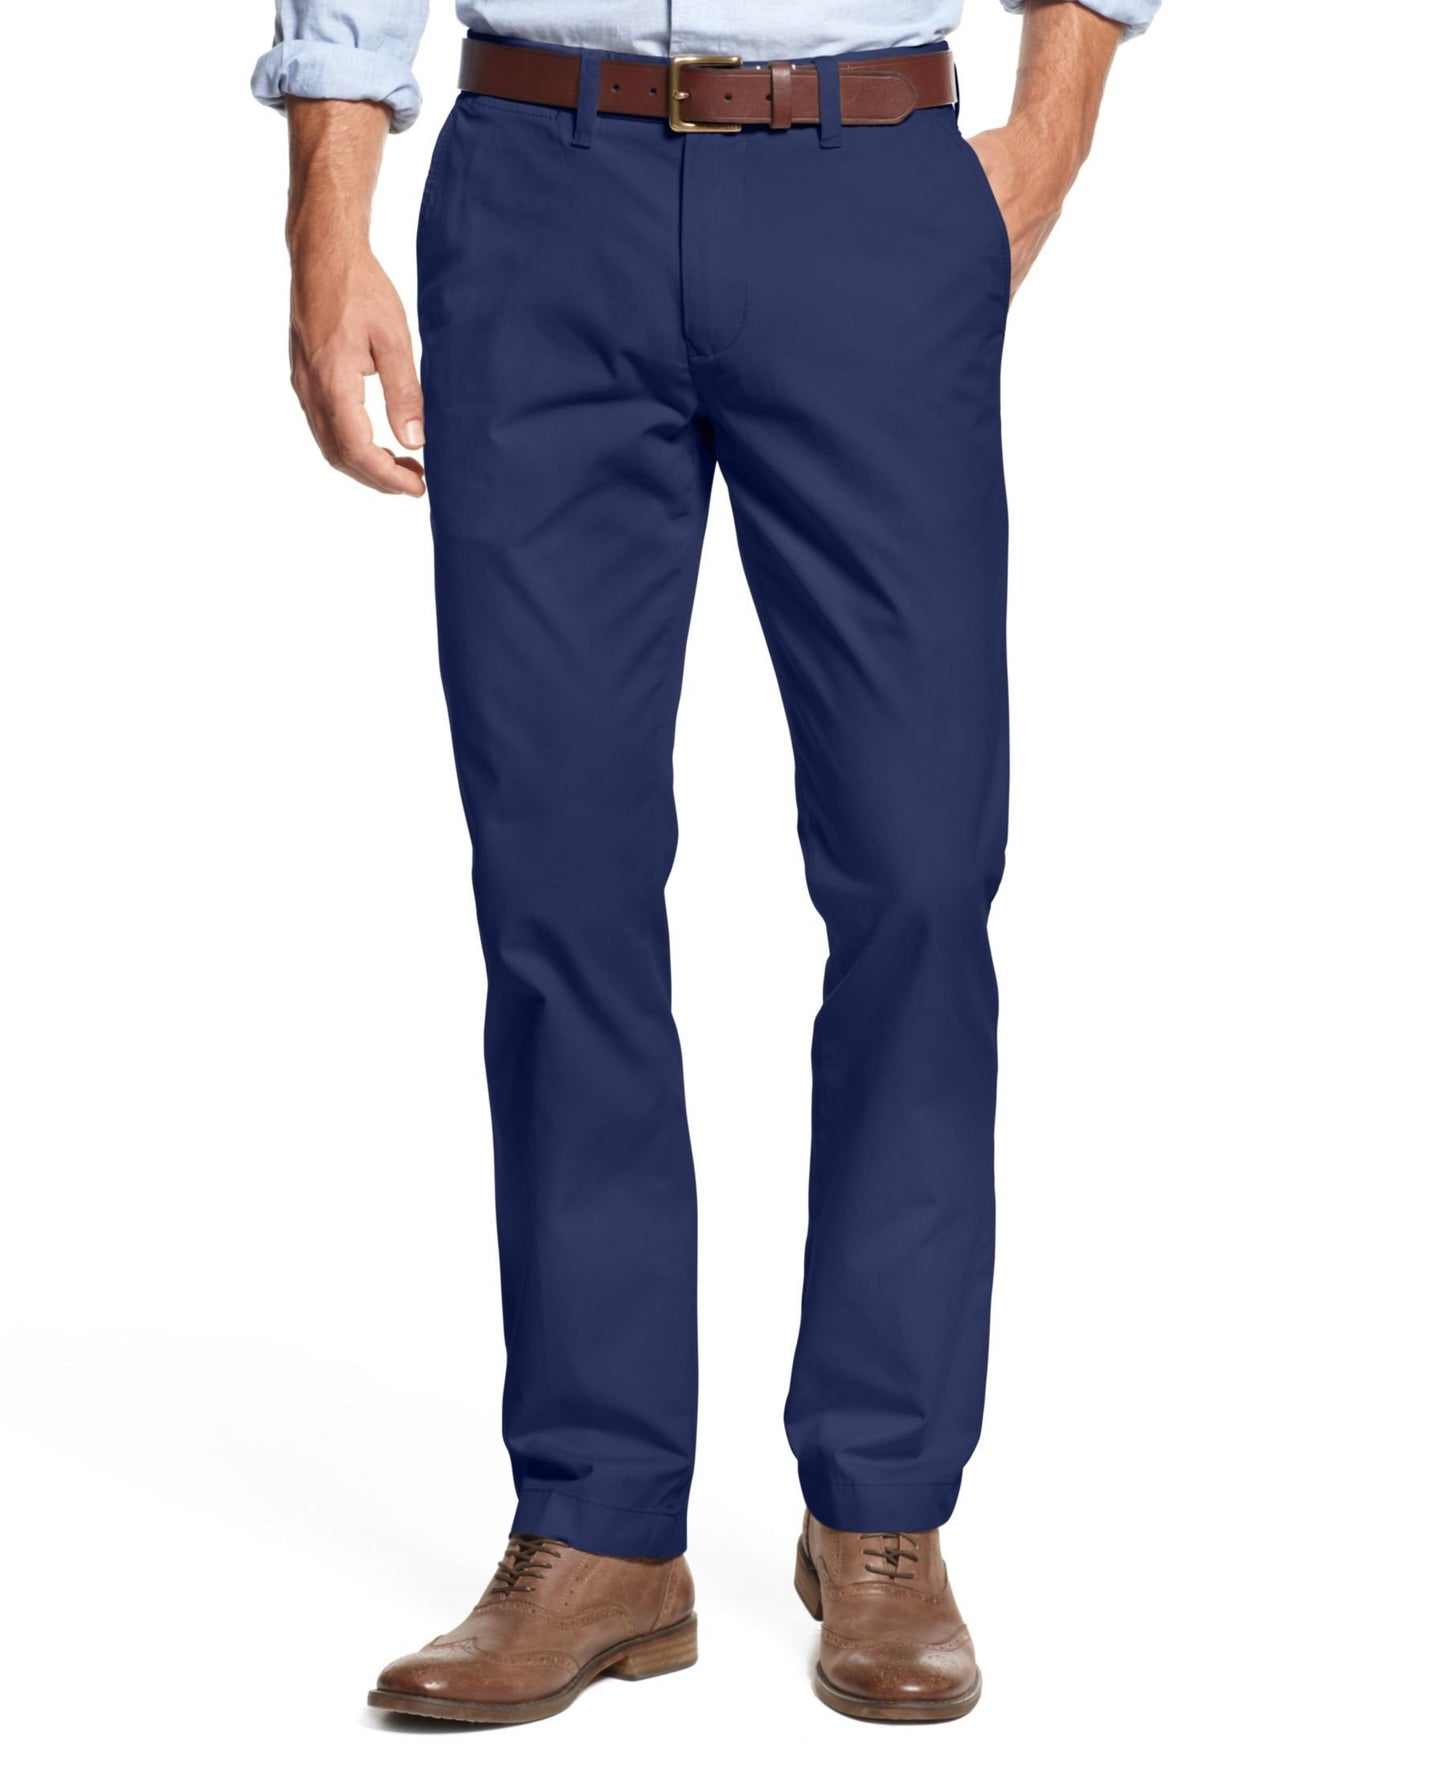 Tommy Hilfiger Men's Custom Fit Chino Pants